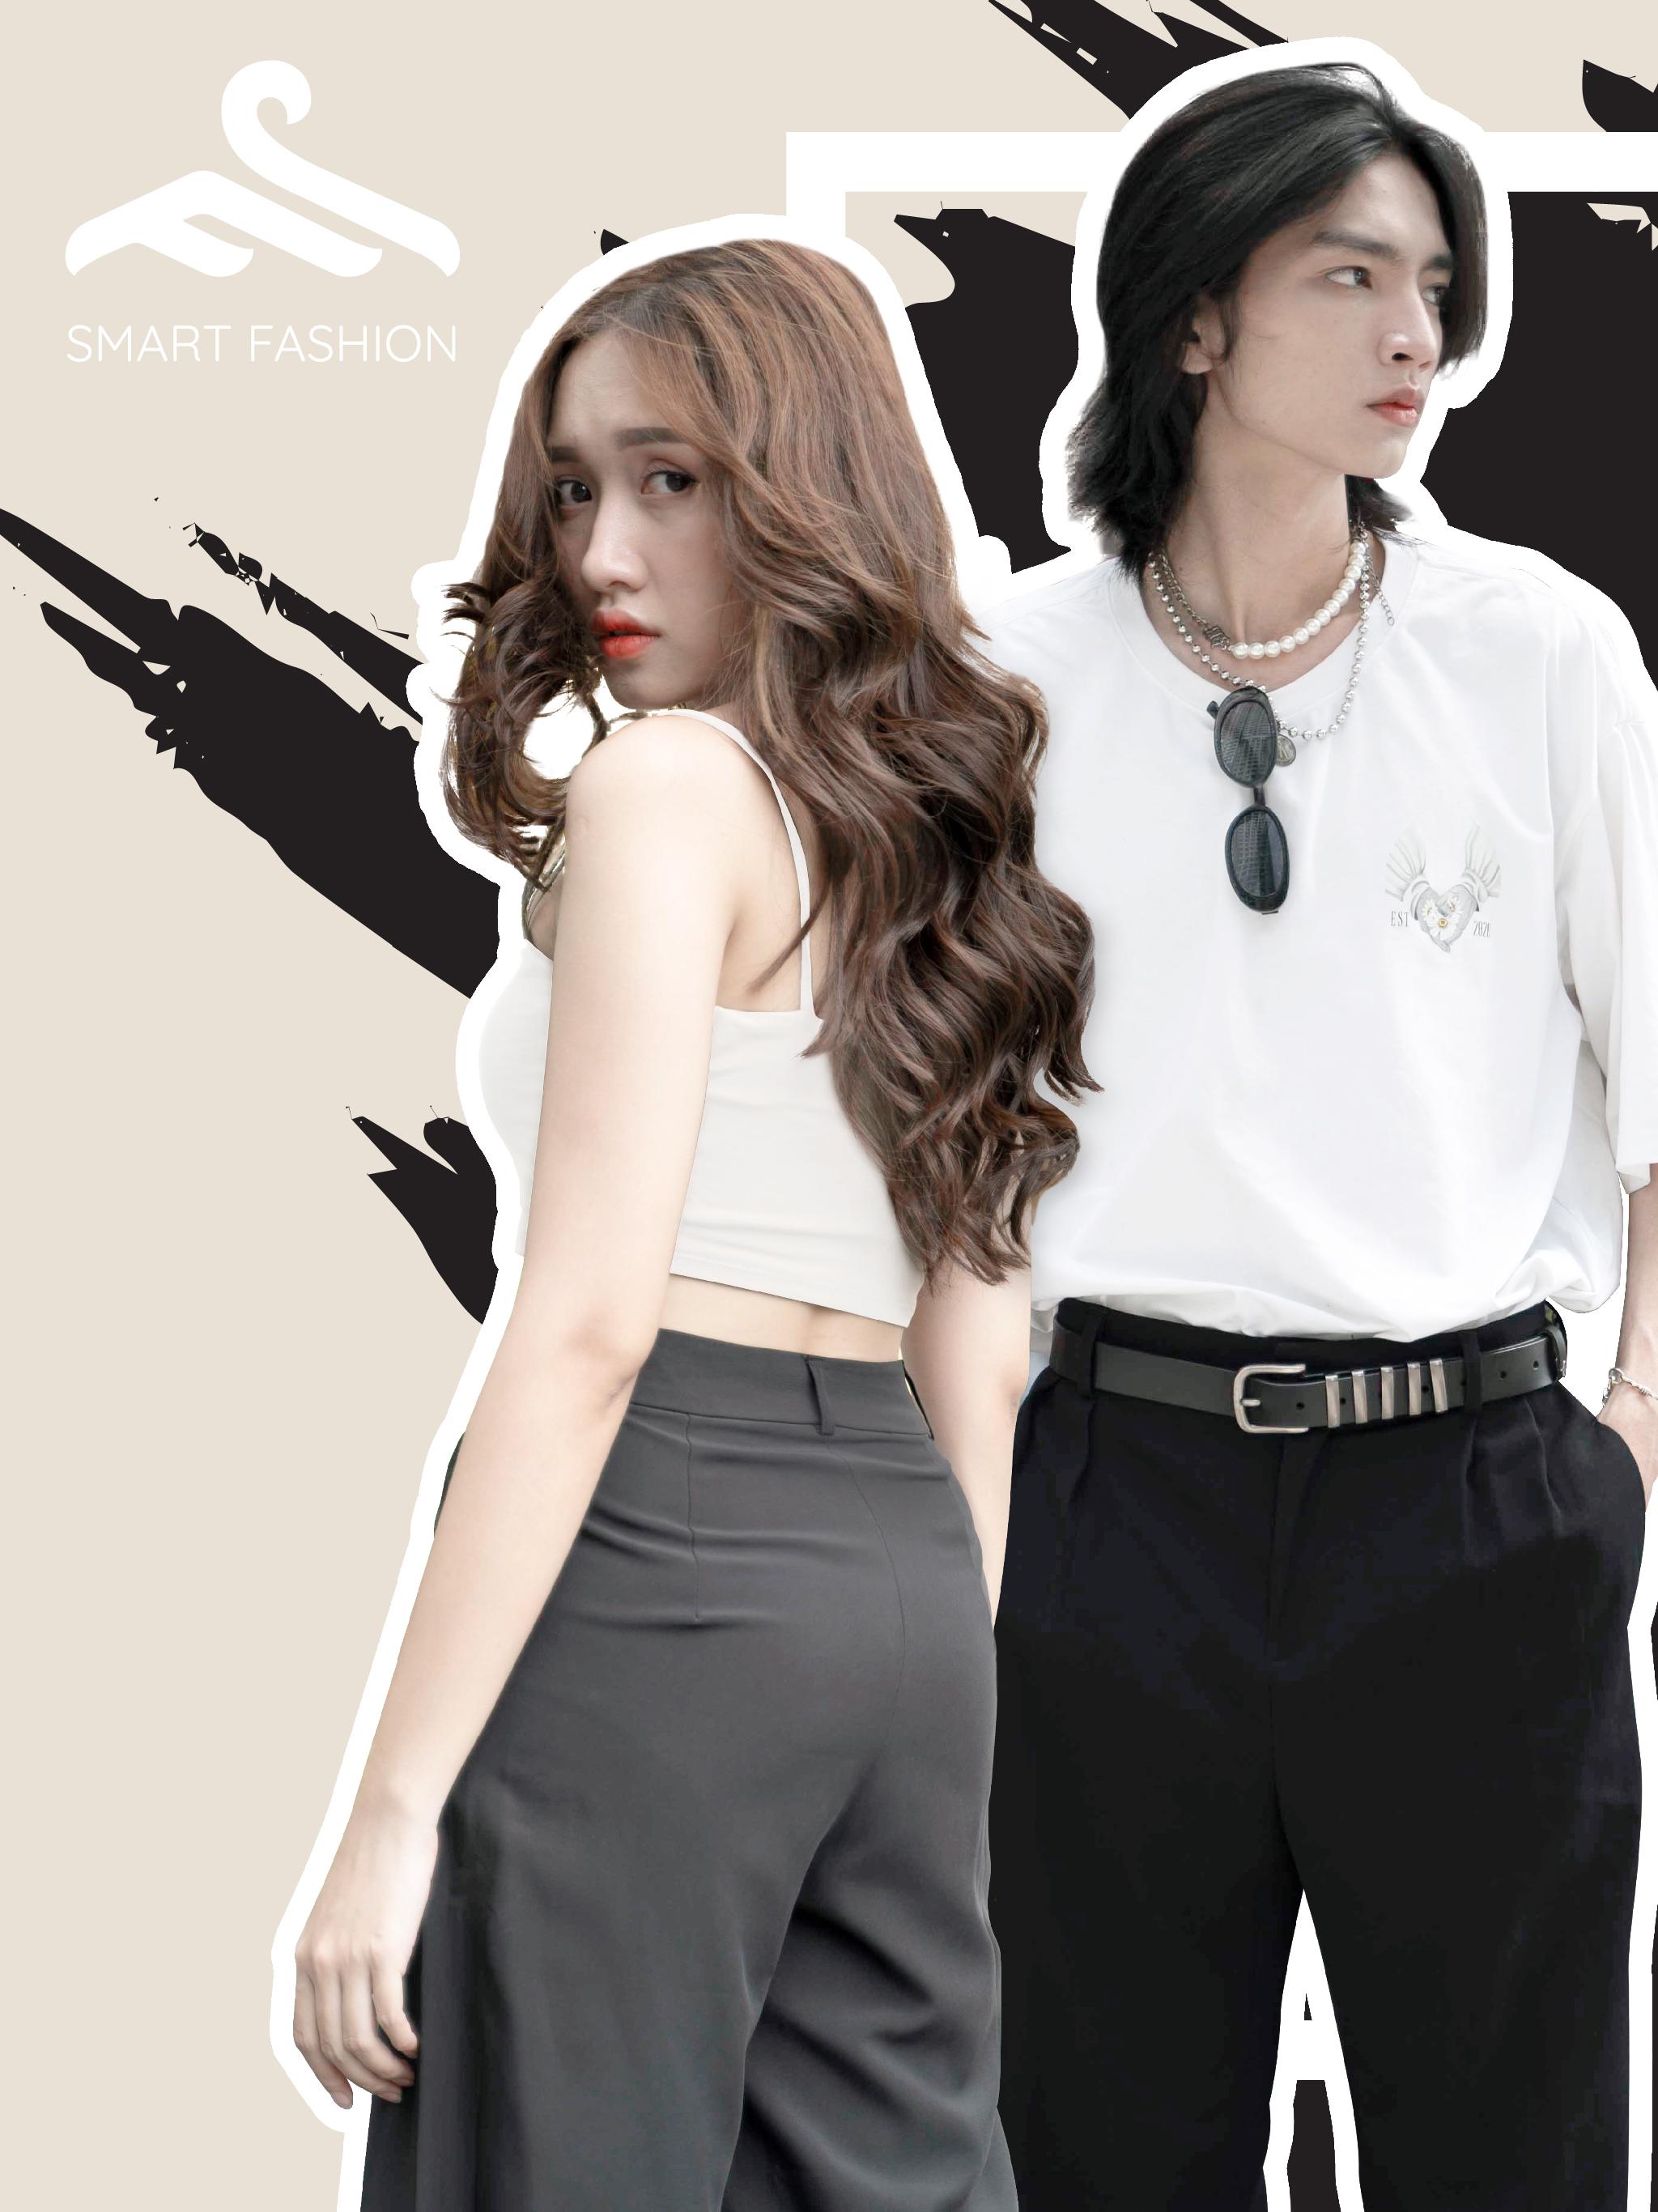 Smart Fashion Try-on, Stylist & Shopping 1.2.9 Screenshot 15